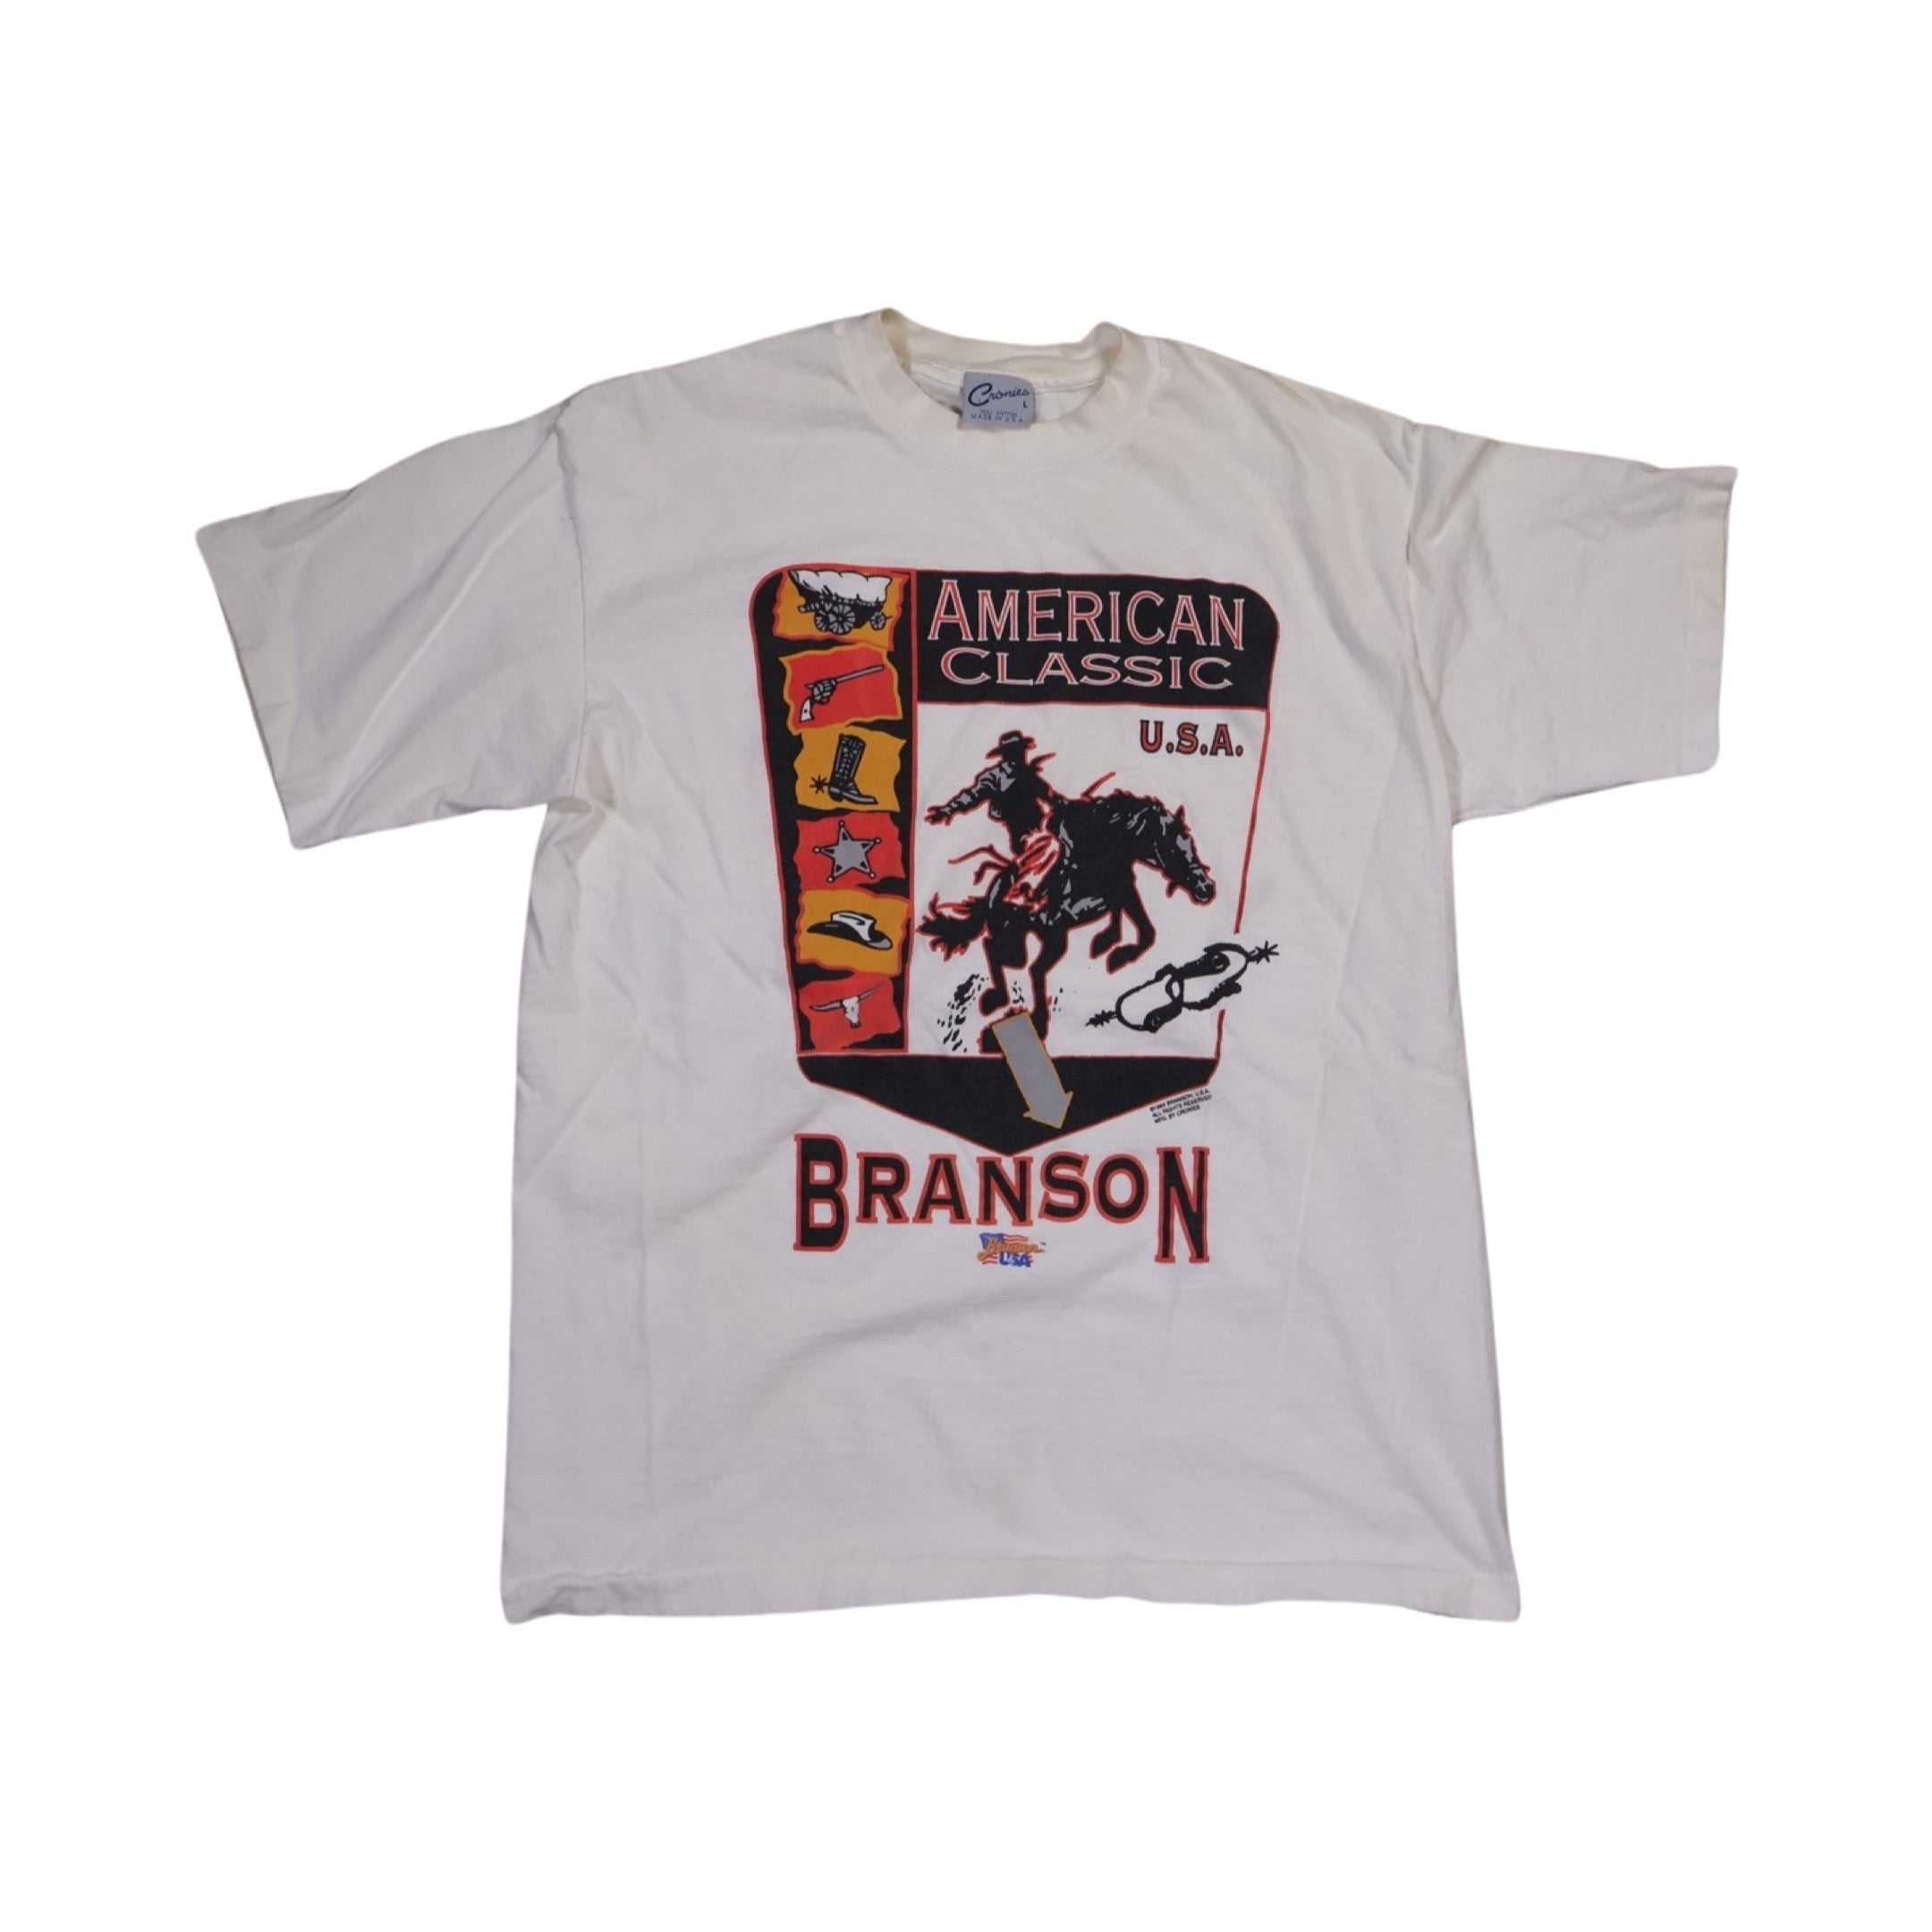 Branson American Classic 1994 T-Shirt (Large)